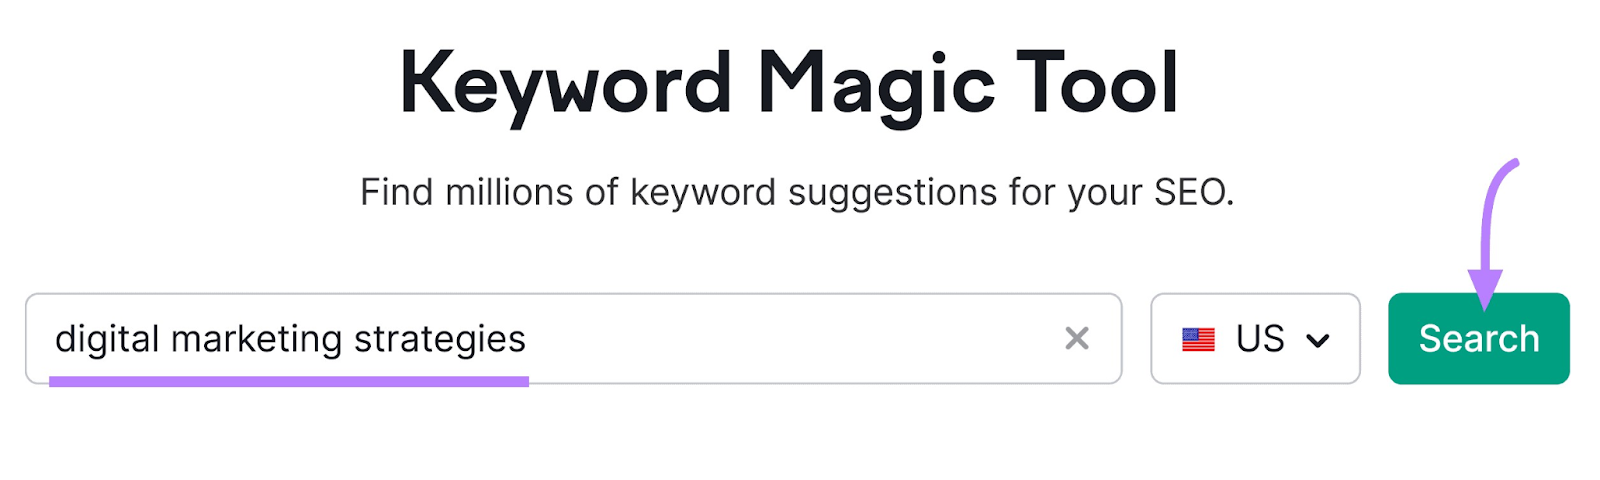 “digital marketing strategies” entered into Keyword Magic Tool search